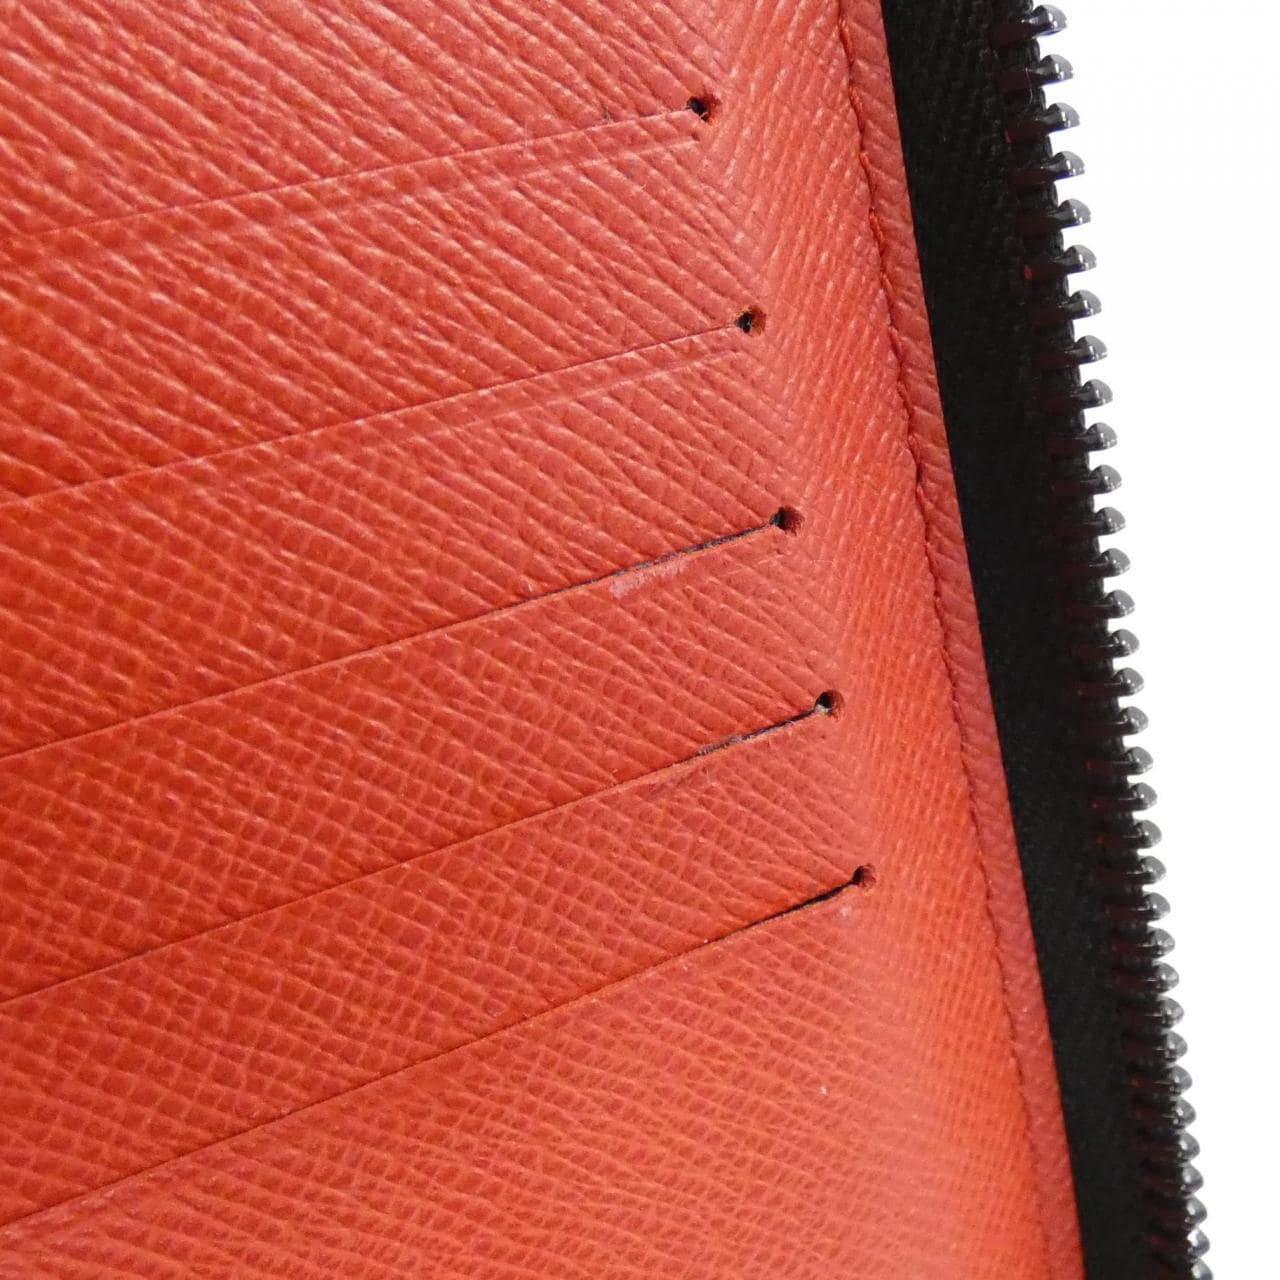 LOUIS VUITTON Vuitton Damier Graphite Utility Zippy Wallet Vertical N60355 Wallet